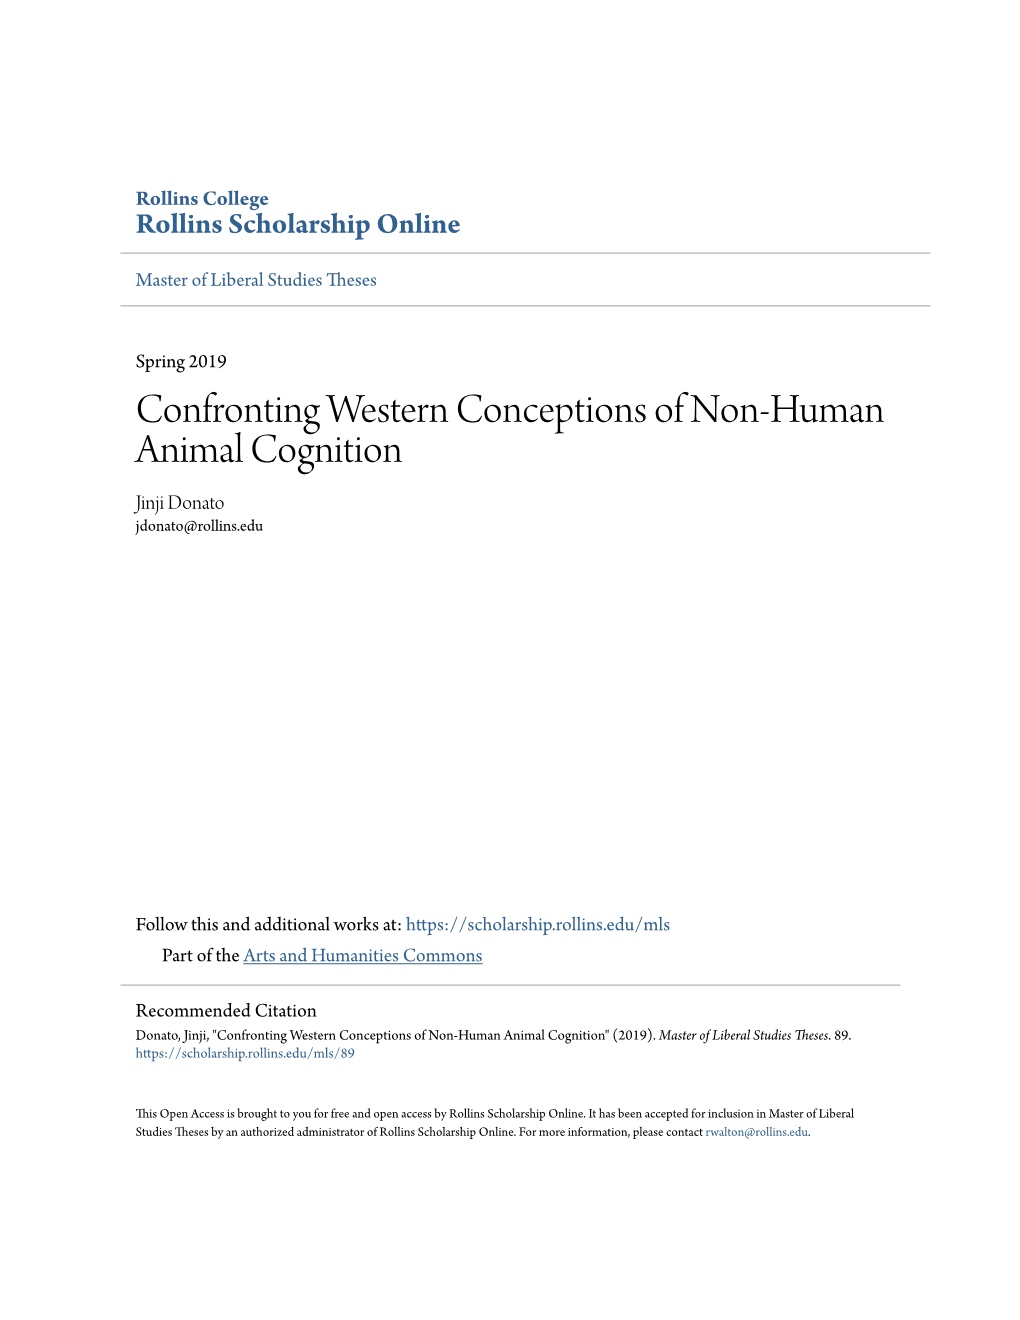 Confronting Western Conceptions of Non-Human Animal Cognition Jinji Donato Jdonato@Rollins.Edu